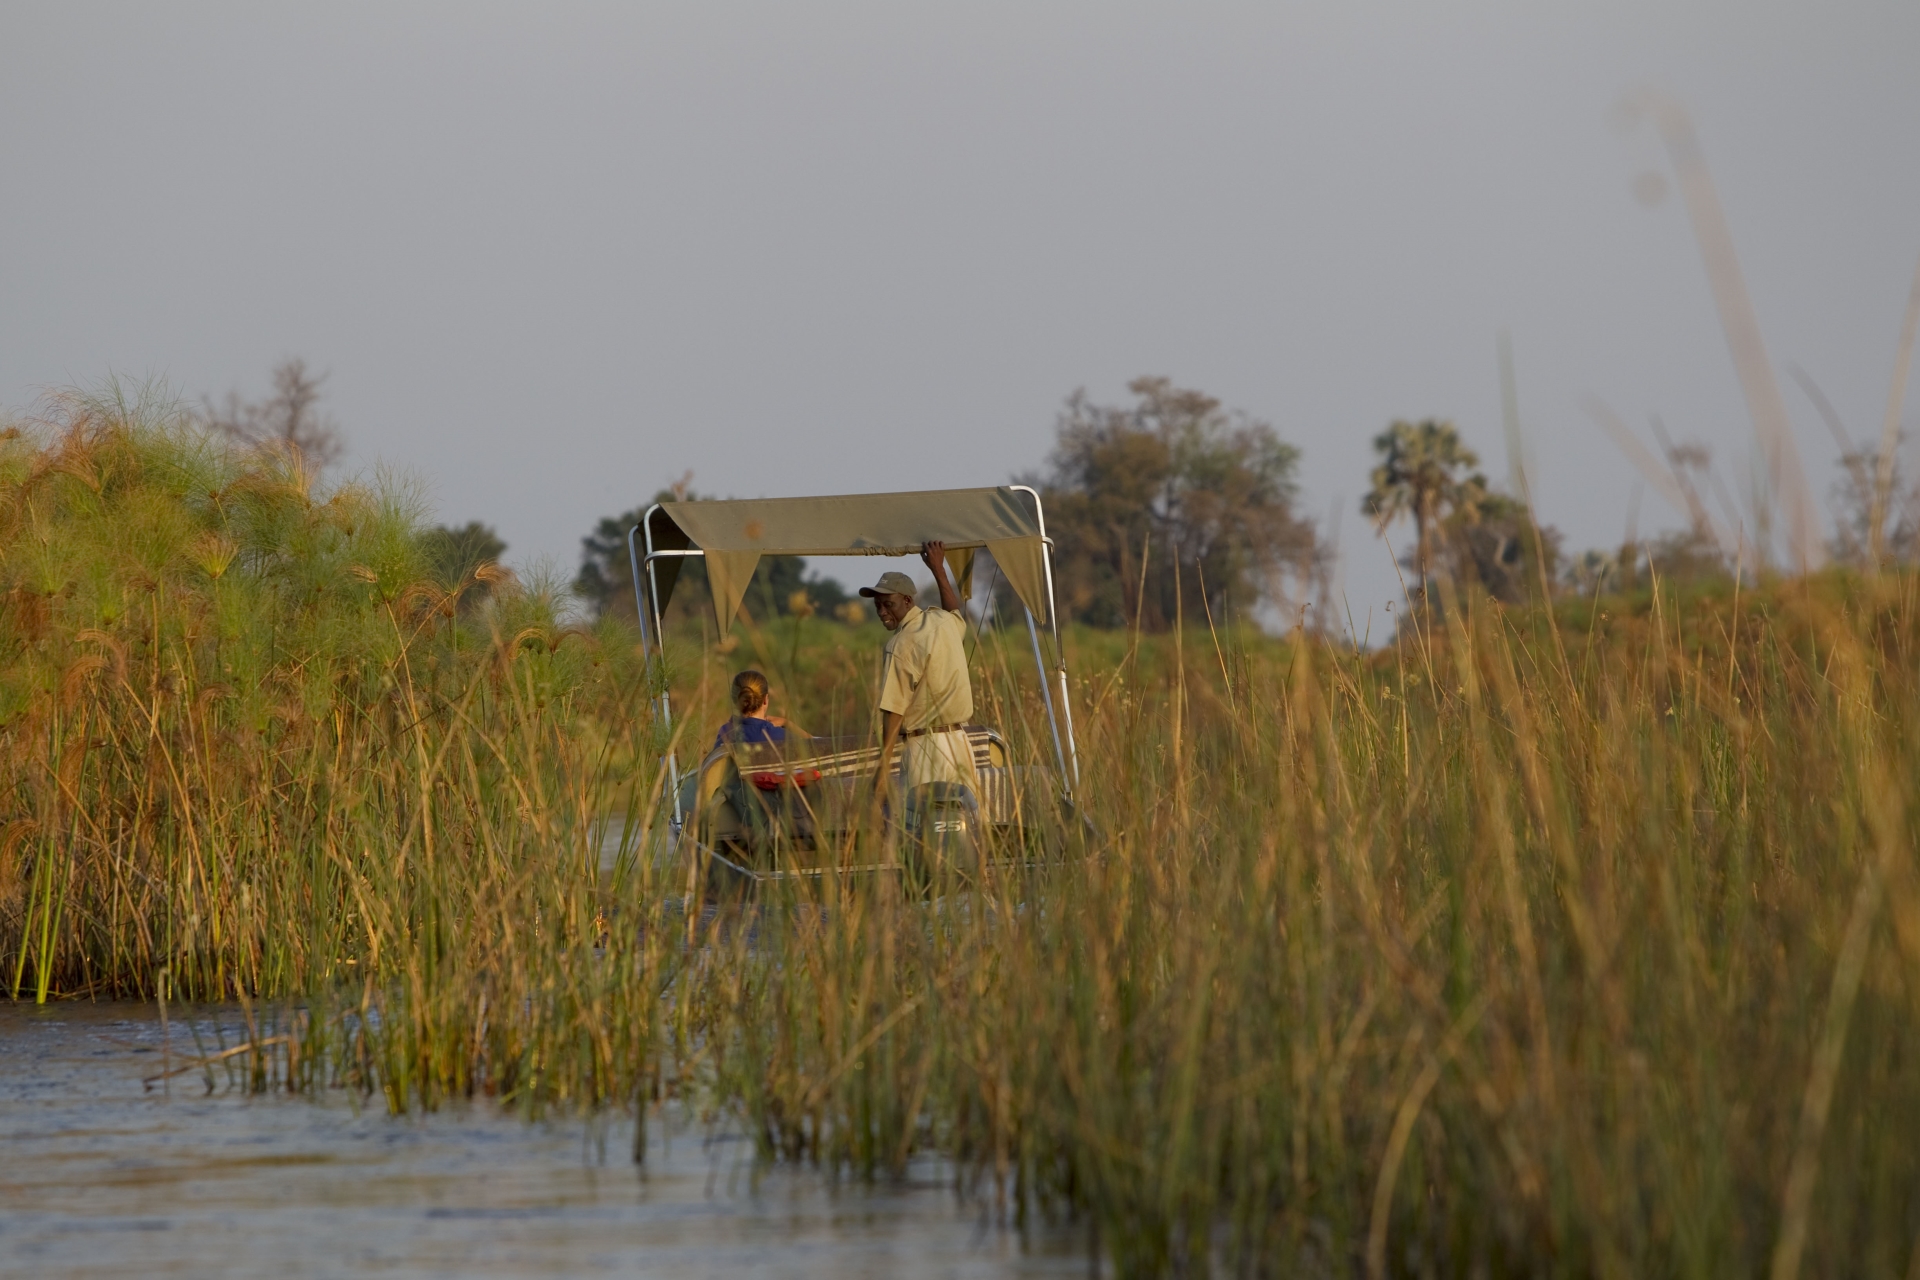 Boat trip on channels - Essential Botswana